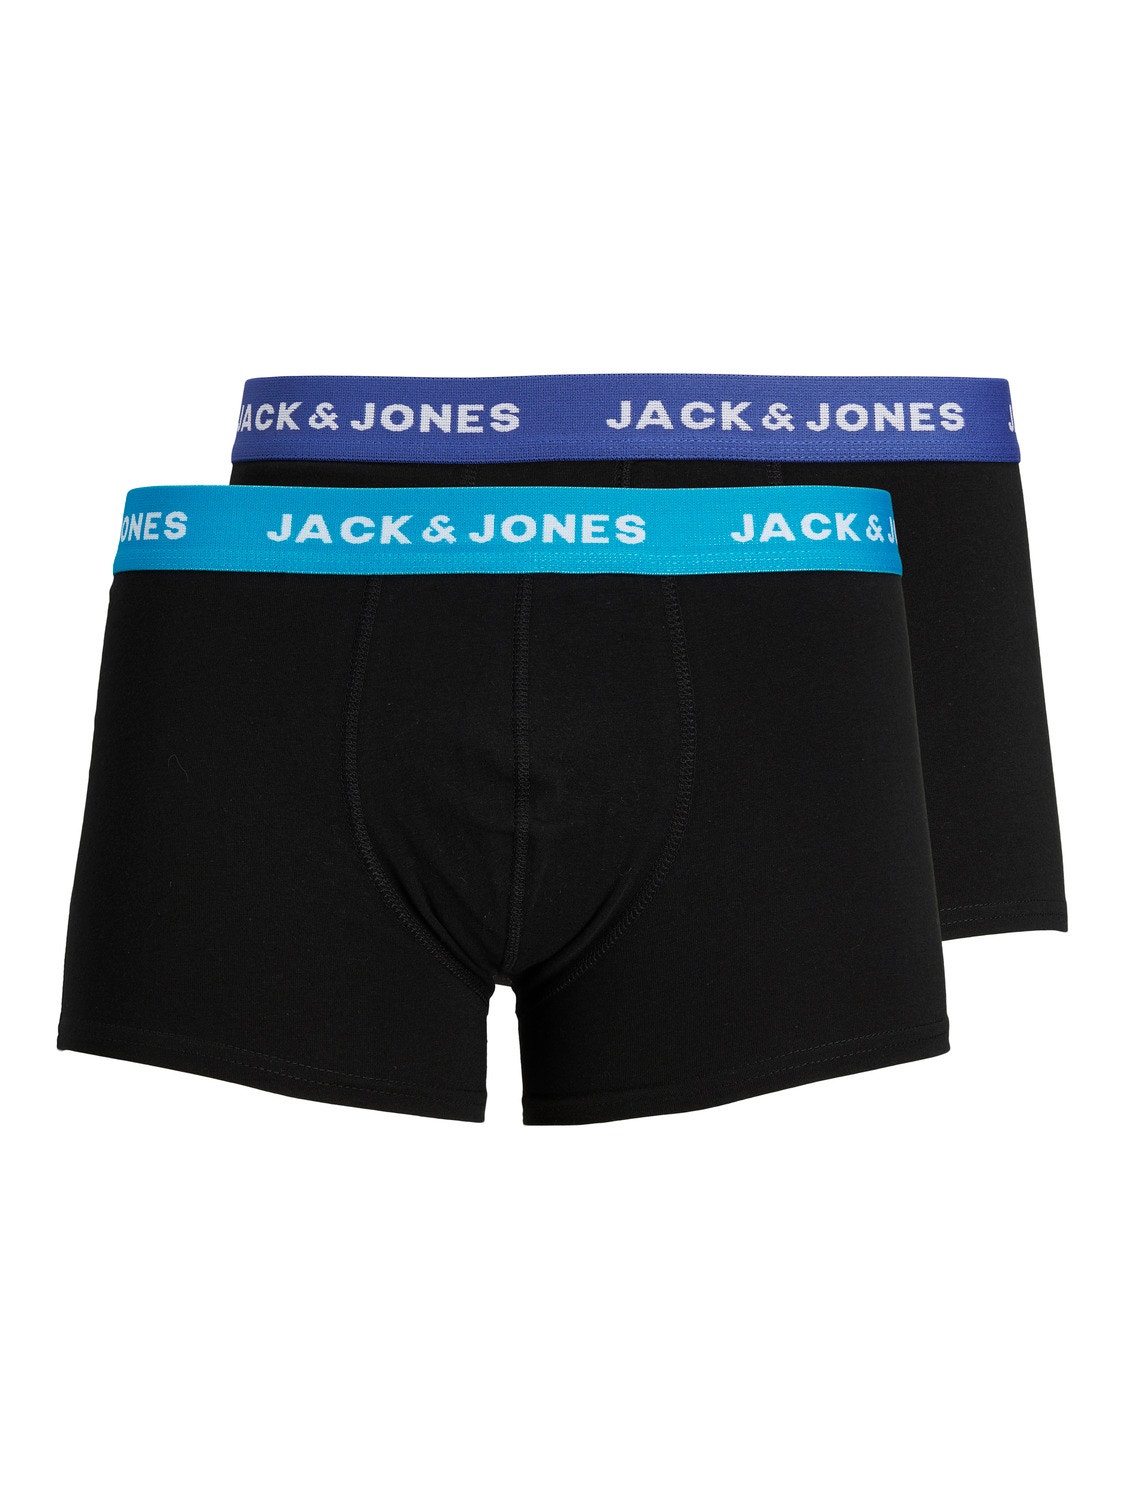 Jack & Jones 2 Trunks -Surf the Web - 12138240